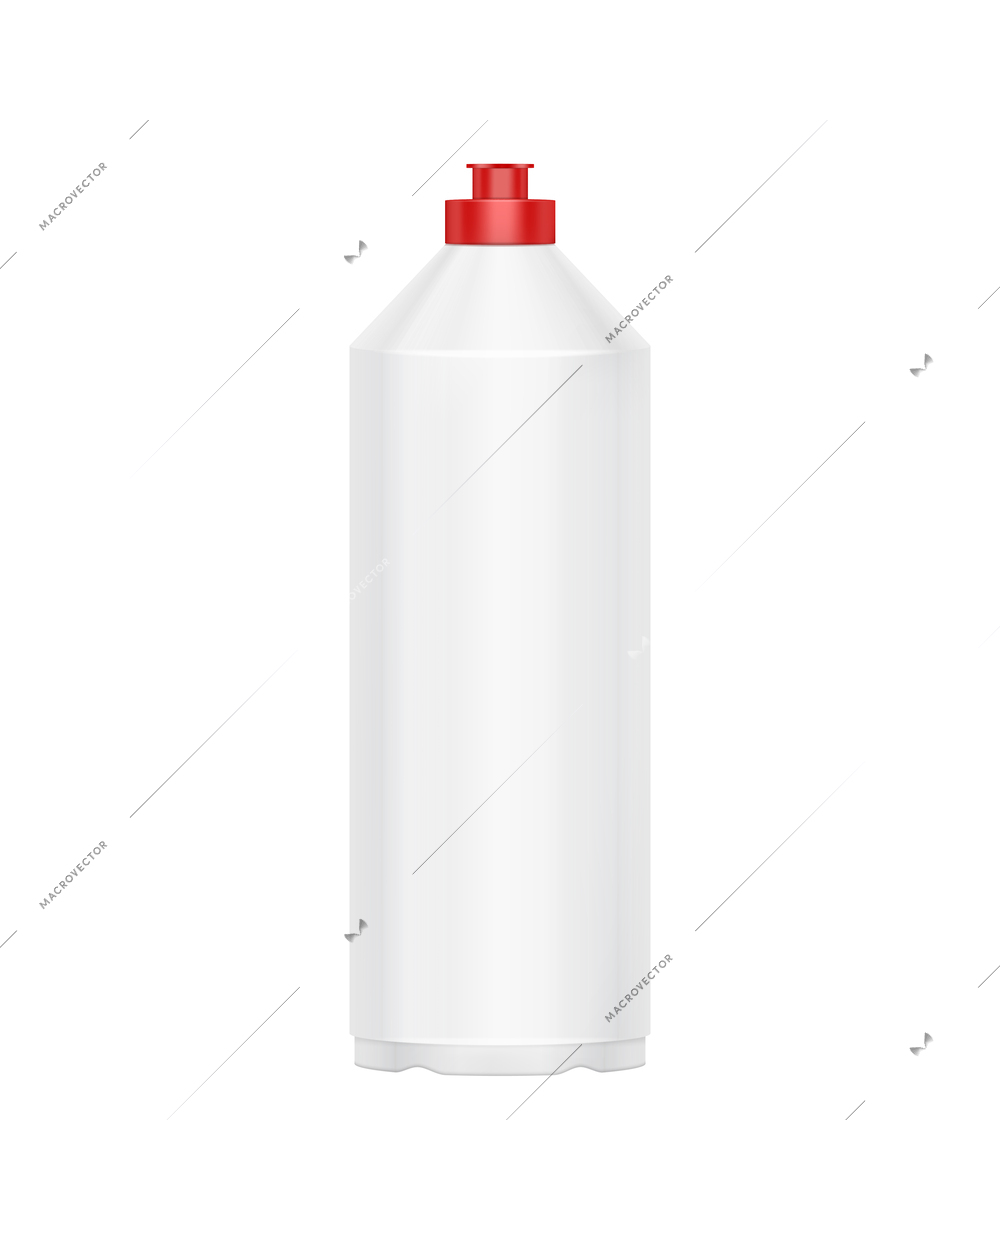 Realistic blank plastic detergent bottle mockup with red lid vector illustration